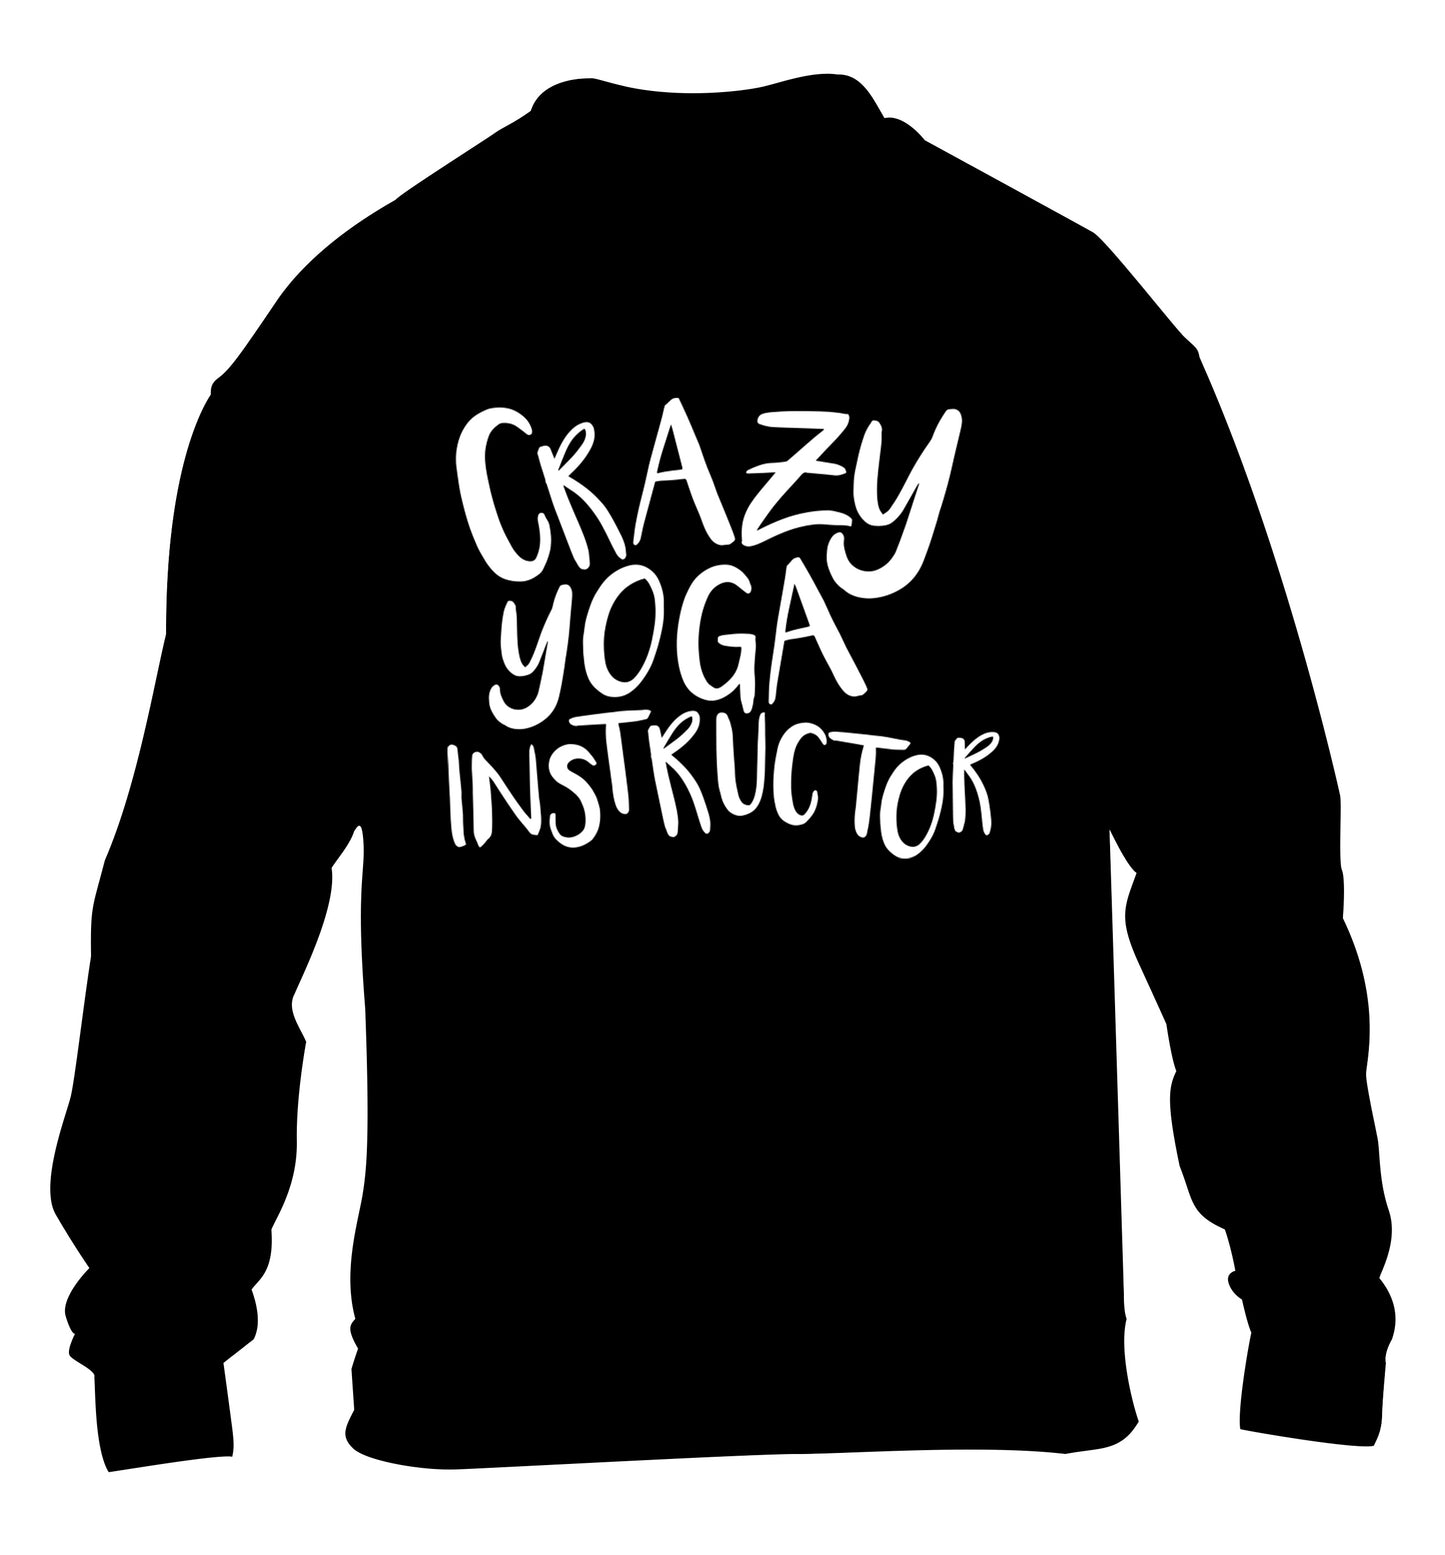 Crazy yoga instructor children's black sweater 12-13 Years